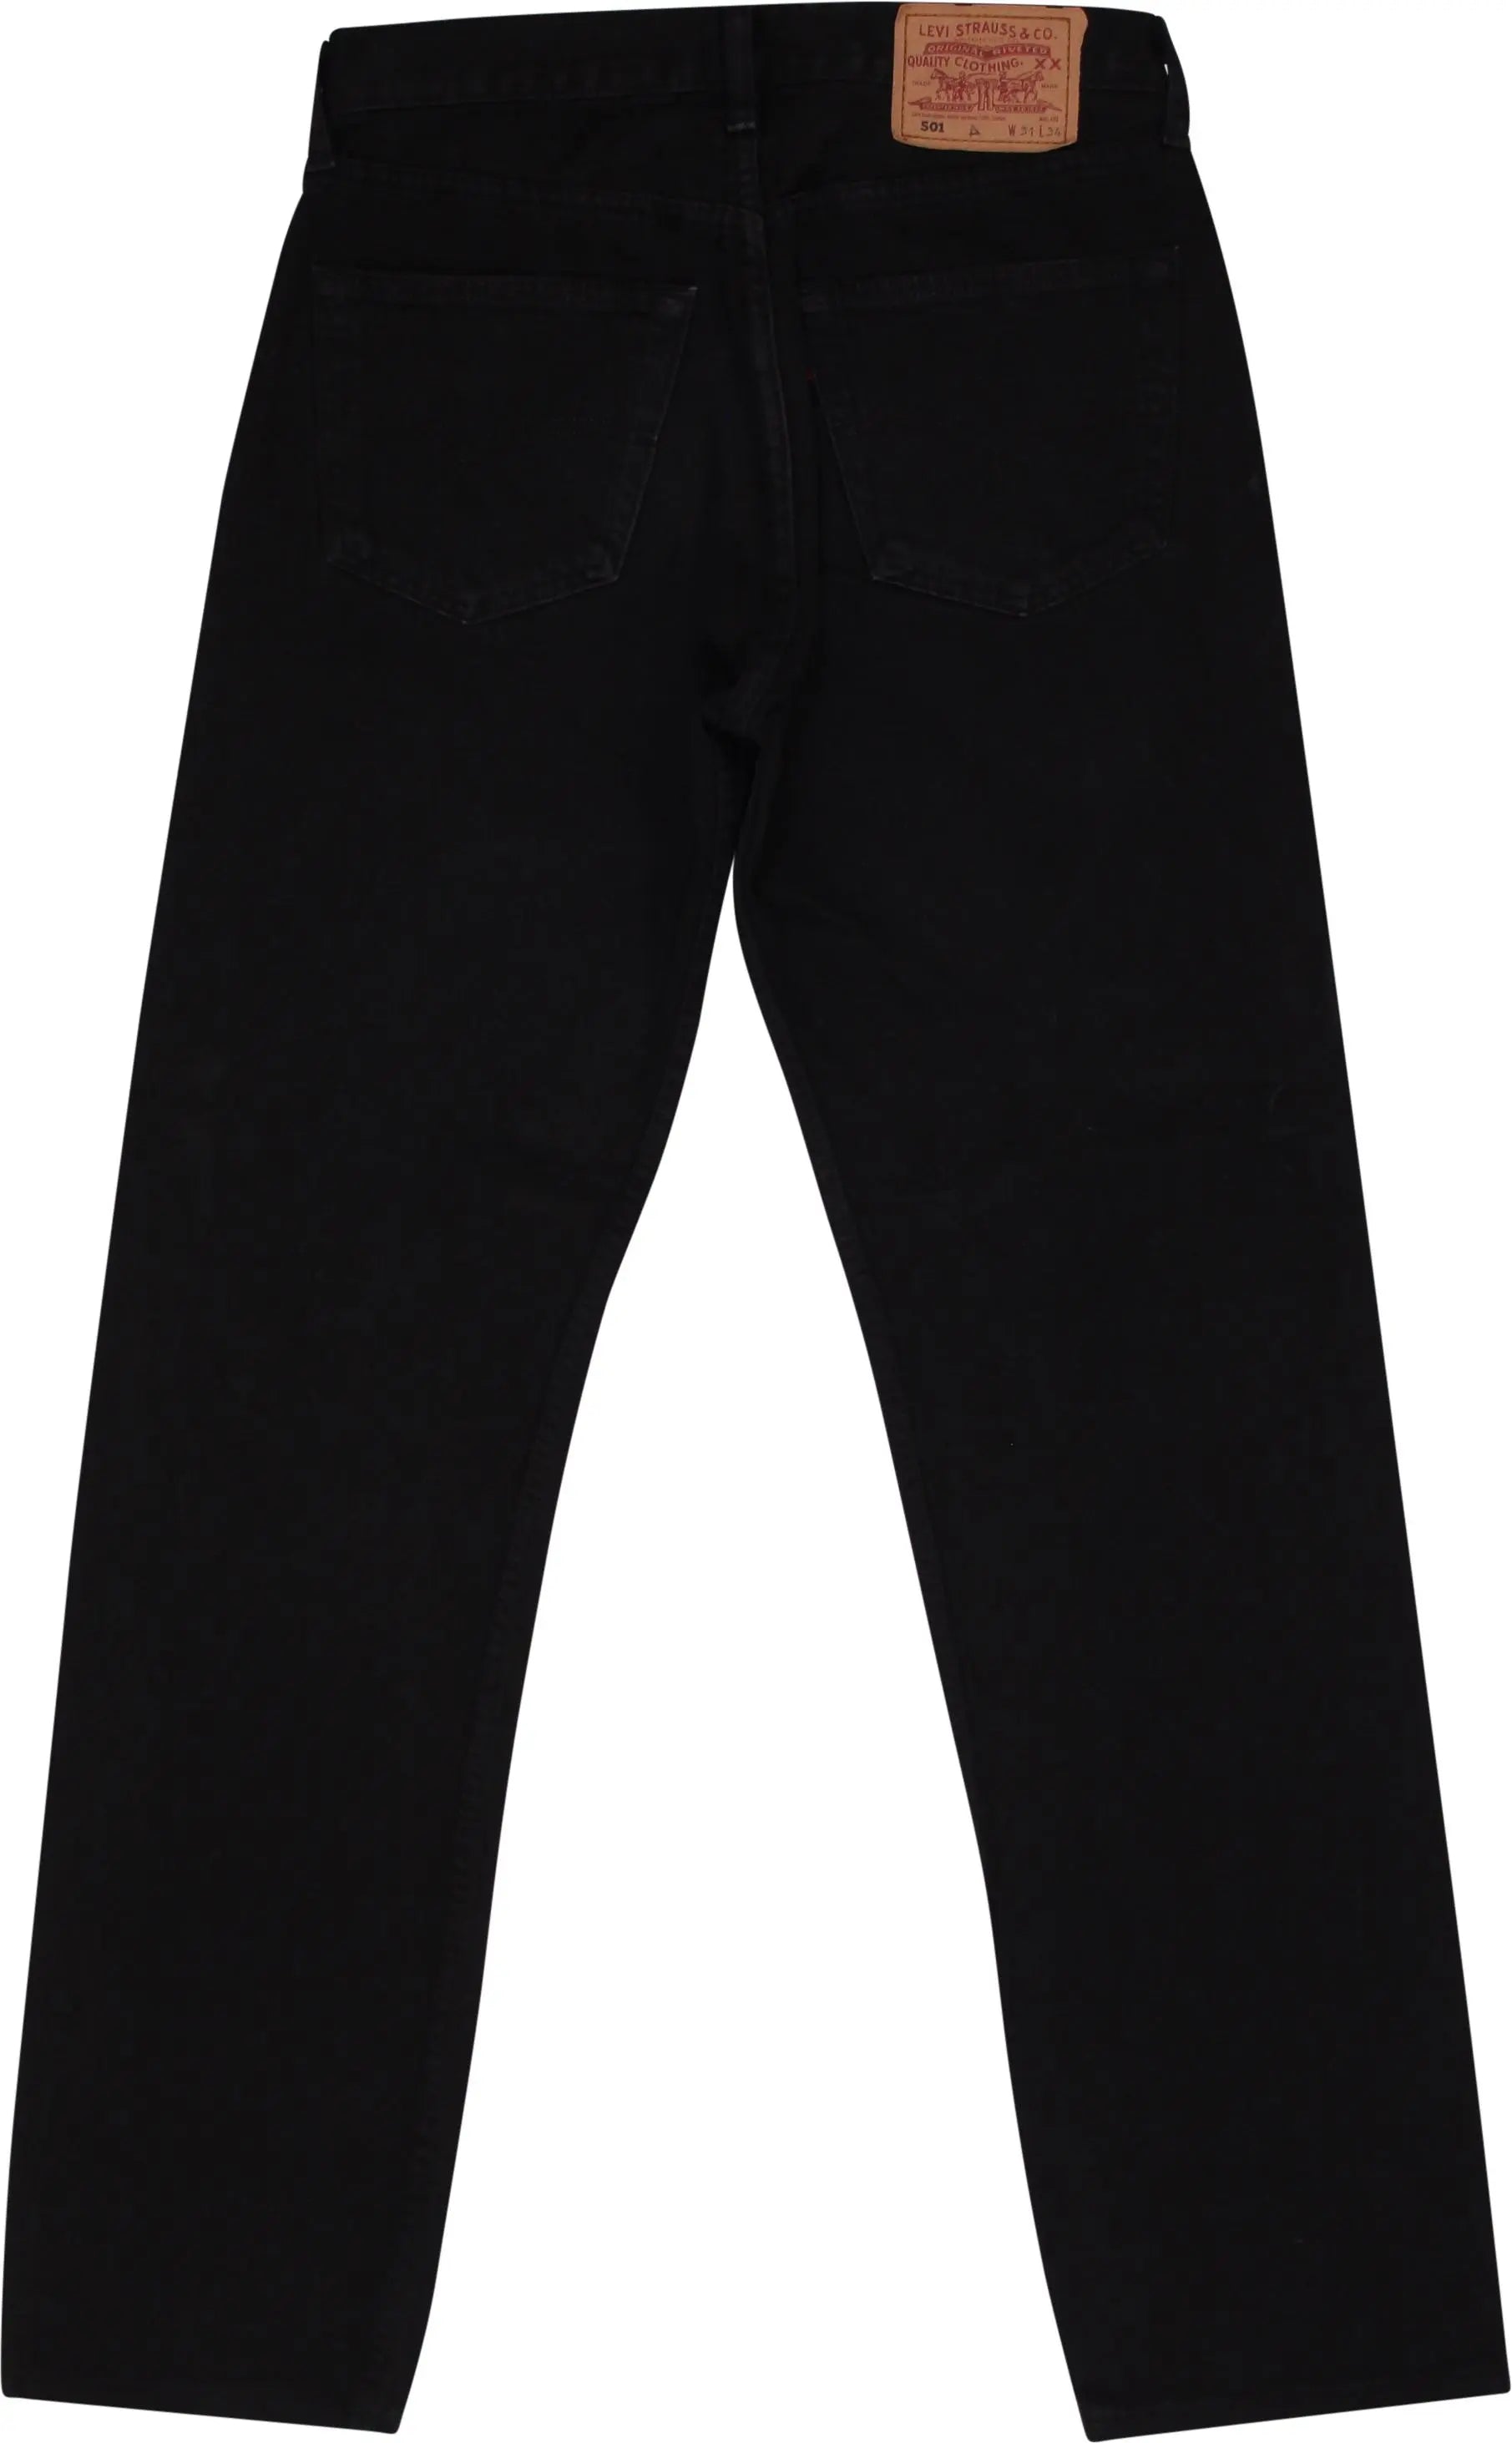 Levi's - Black 501 Levi's Jeans- ThriftTale.com - Vintage and second handclothing